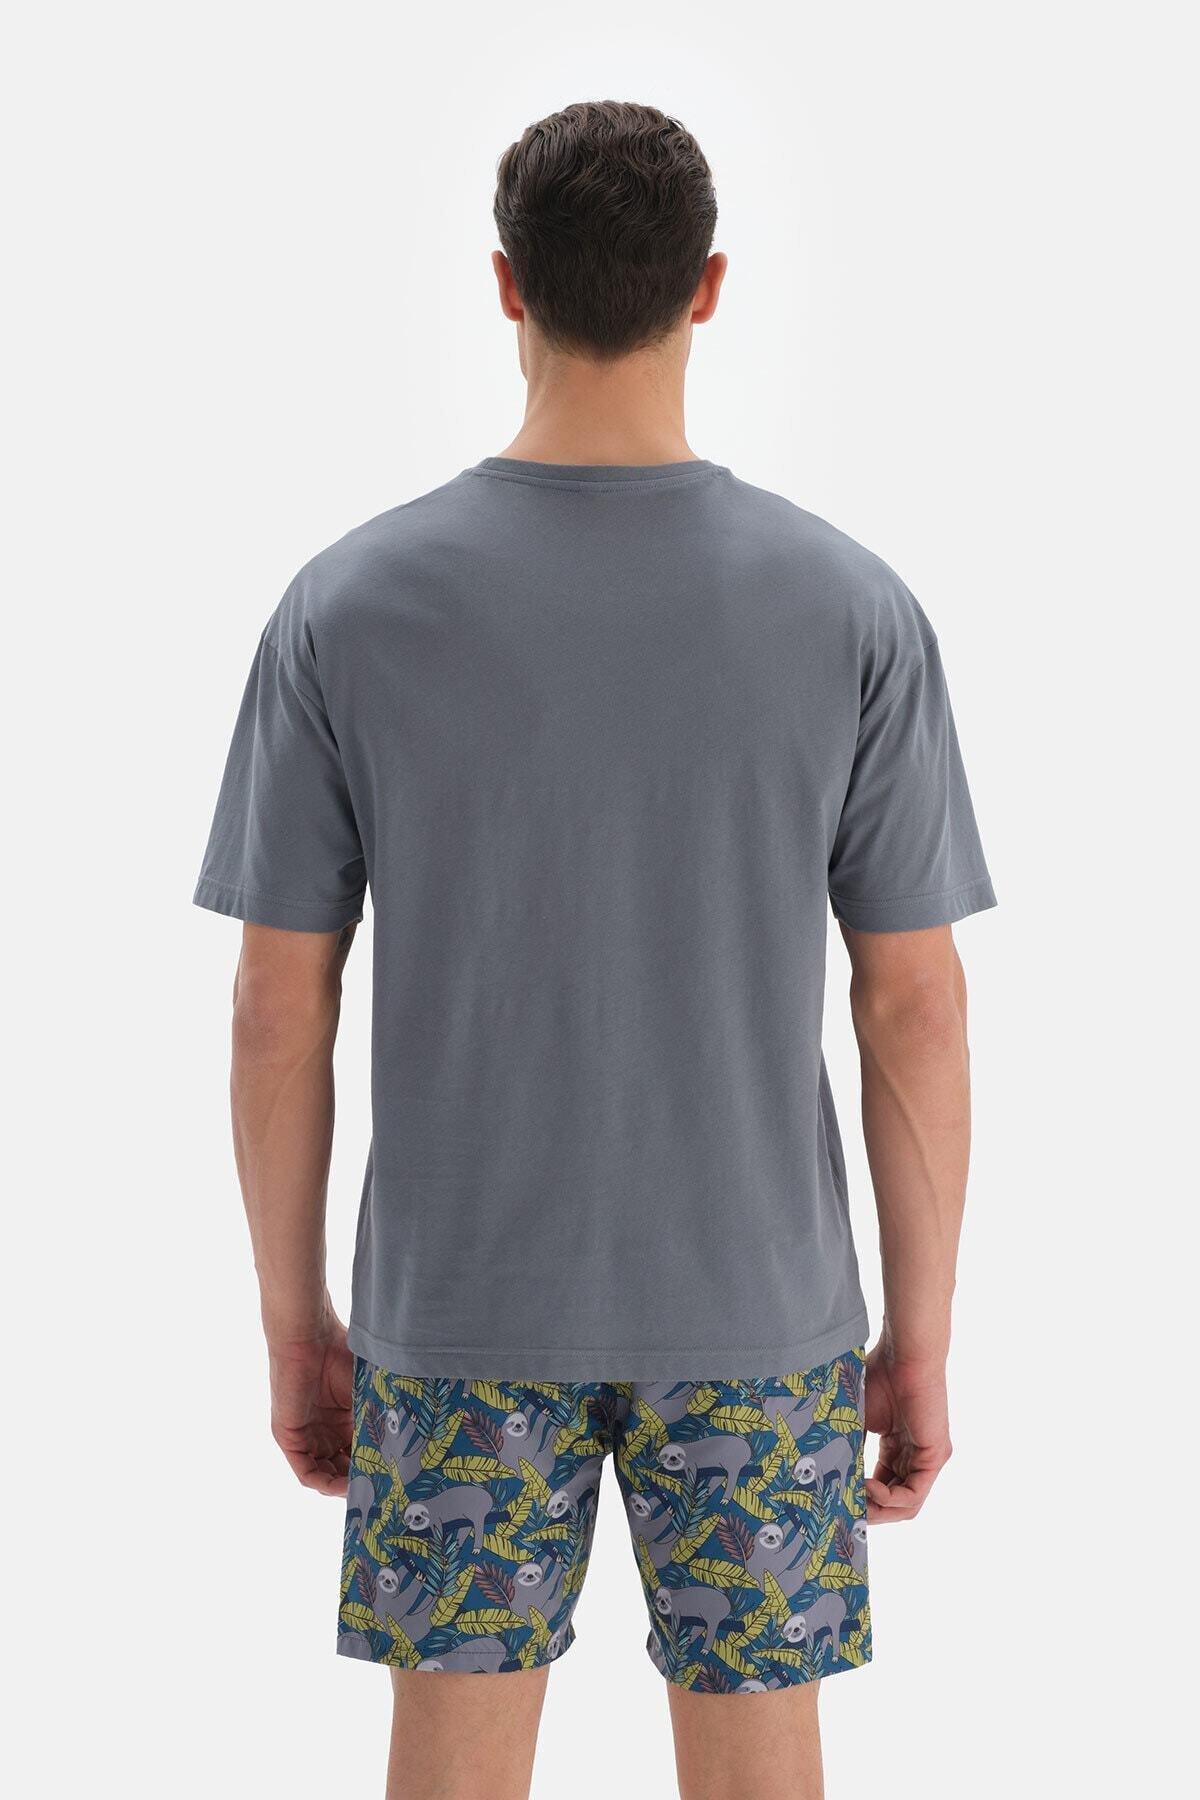 Dagi - Grey Printed T-Shirt